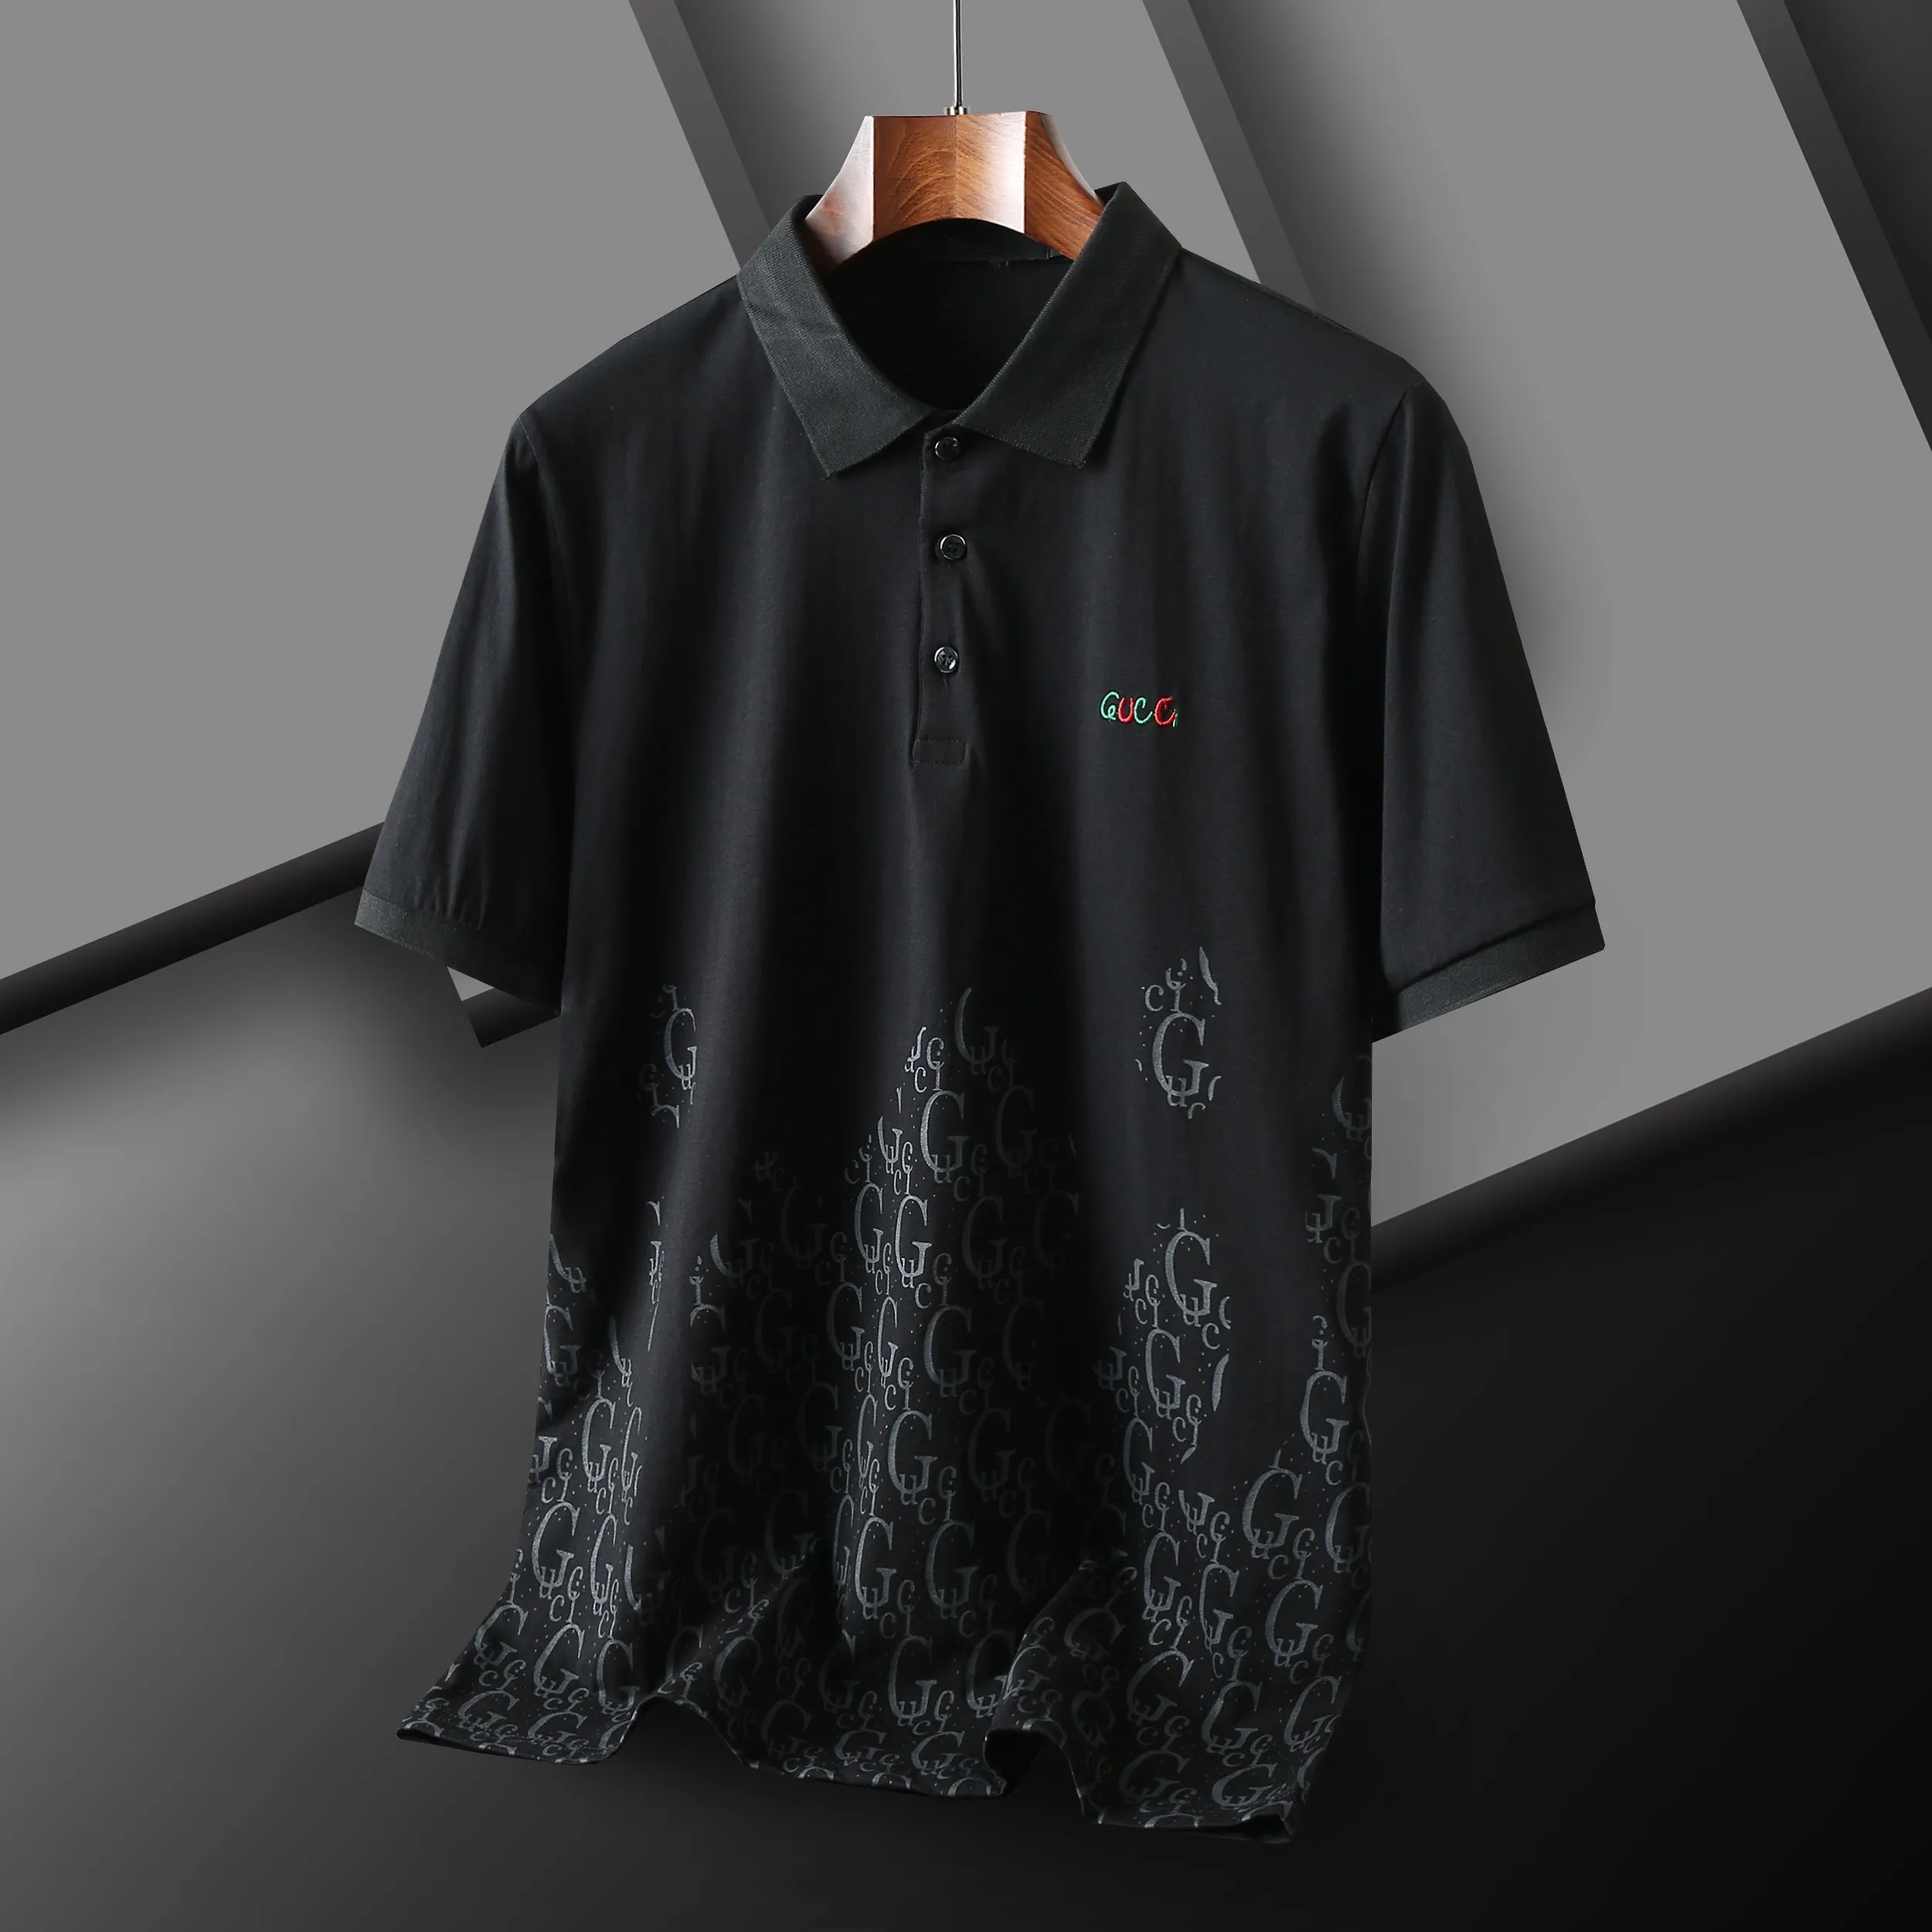 Summer Hot Men's New Polo Shirts High Quality Breathable Polo Shirt Short Sleeve Tops Leisure Wear Man T-shirt